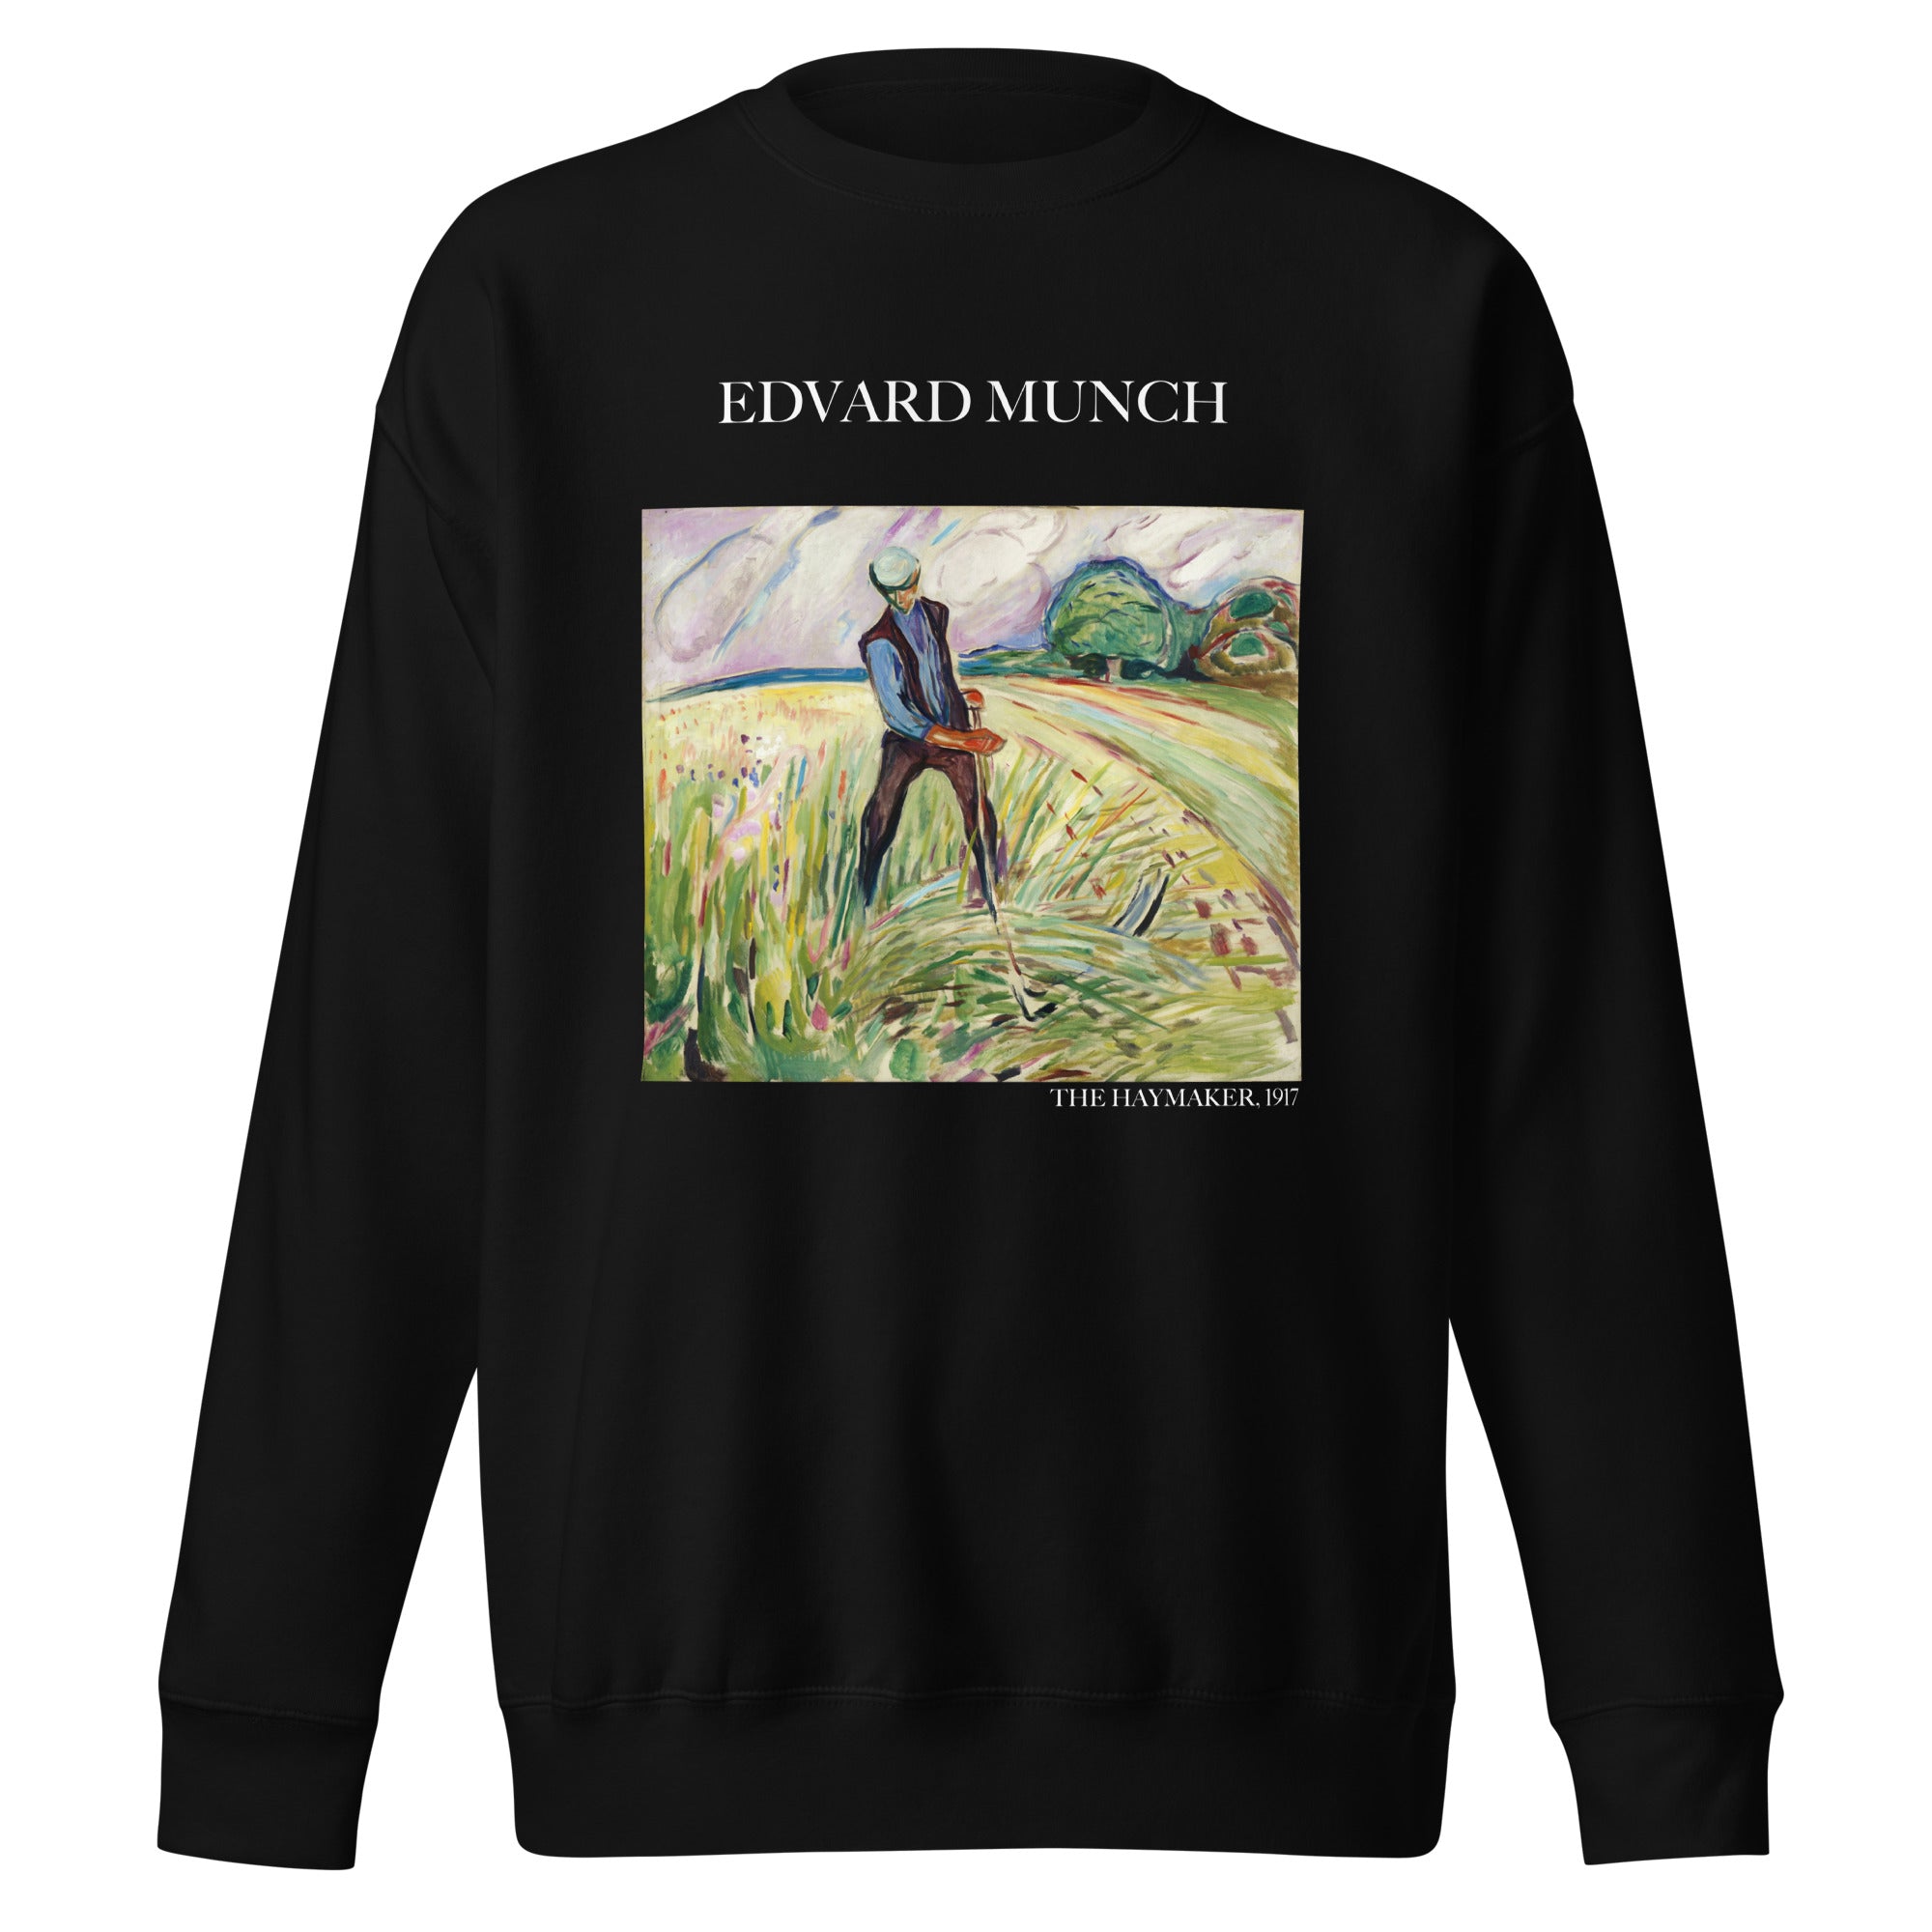 Edvard Munch 'The Haymaker' Famous Painting Sweatshirt | Unisex Premium SweatshirtEdvard Munch 'The Haymaker' Famous Painting Sweatshirt | Unisex Premium Sweatshirt